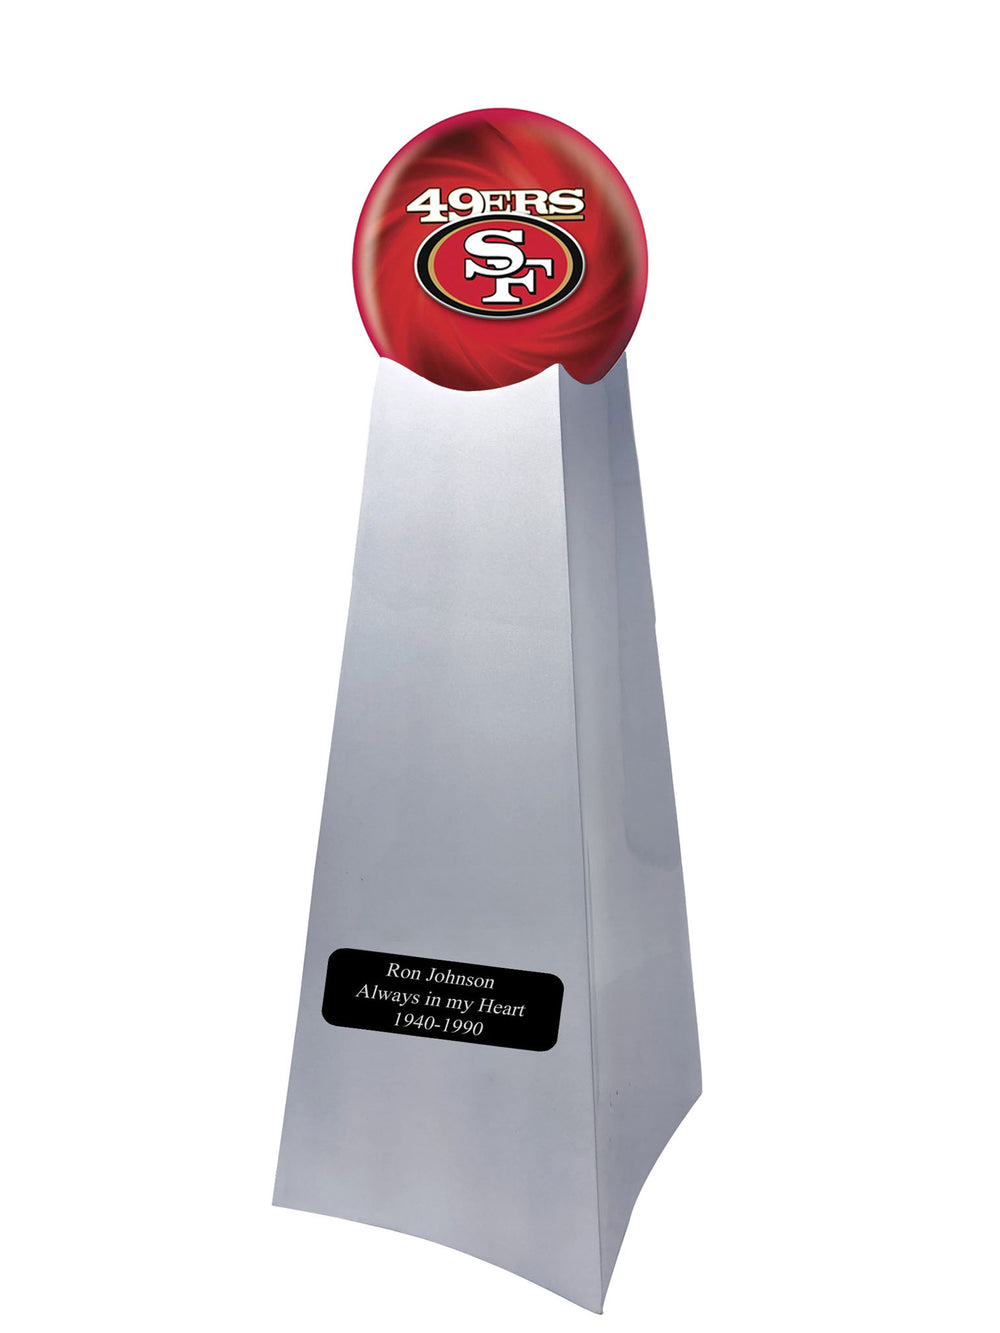 Championship Trophy Urn Base with Optional San Francisco 49ers Team Sphere